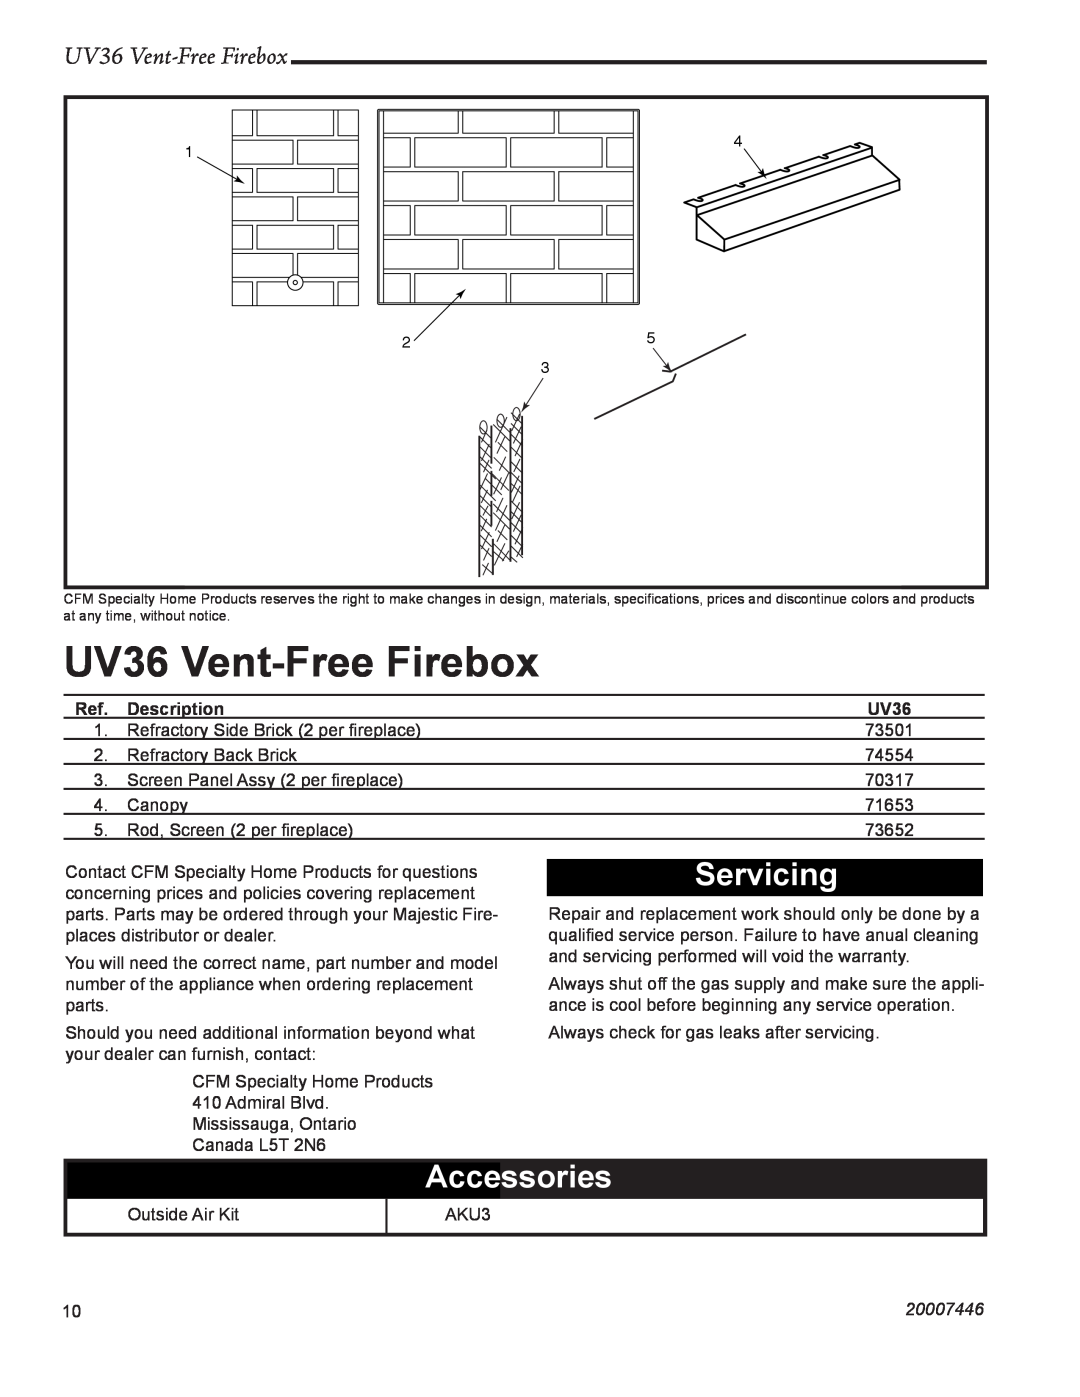 Majestic Appliances installation instructions UV36 Vent-FreeFirebox, Servicing, Accessories, 20007446 